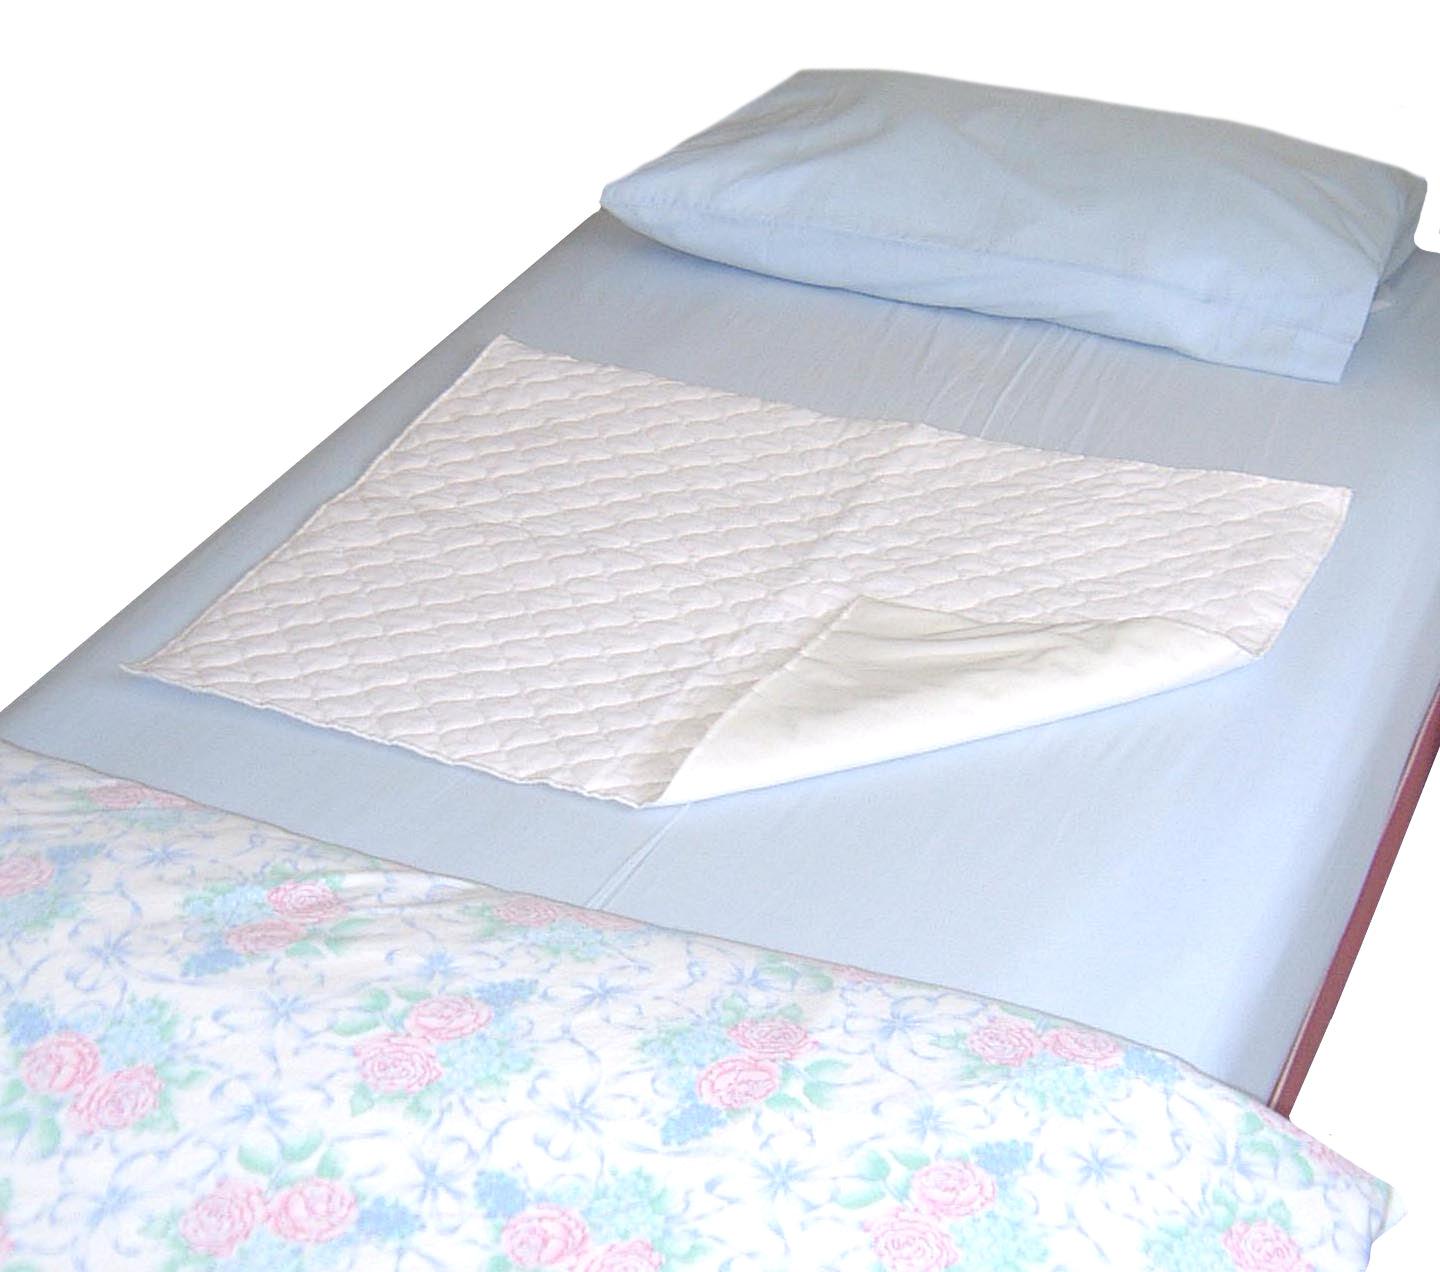 waterproof bed pads washable UK MEDORIS